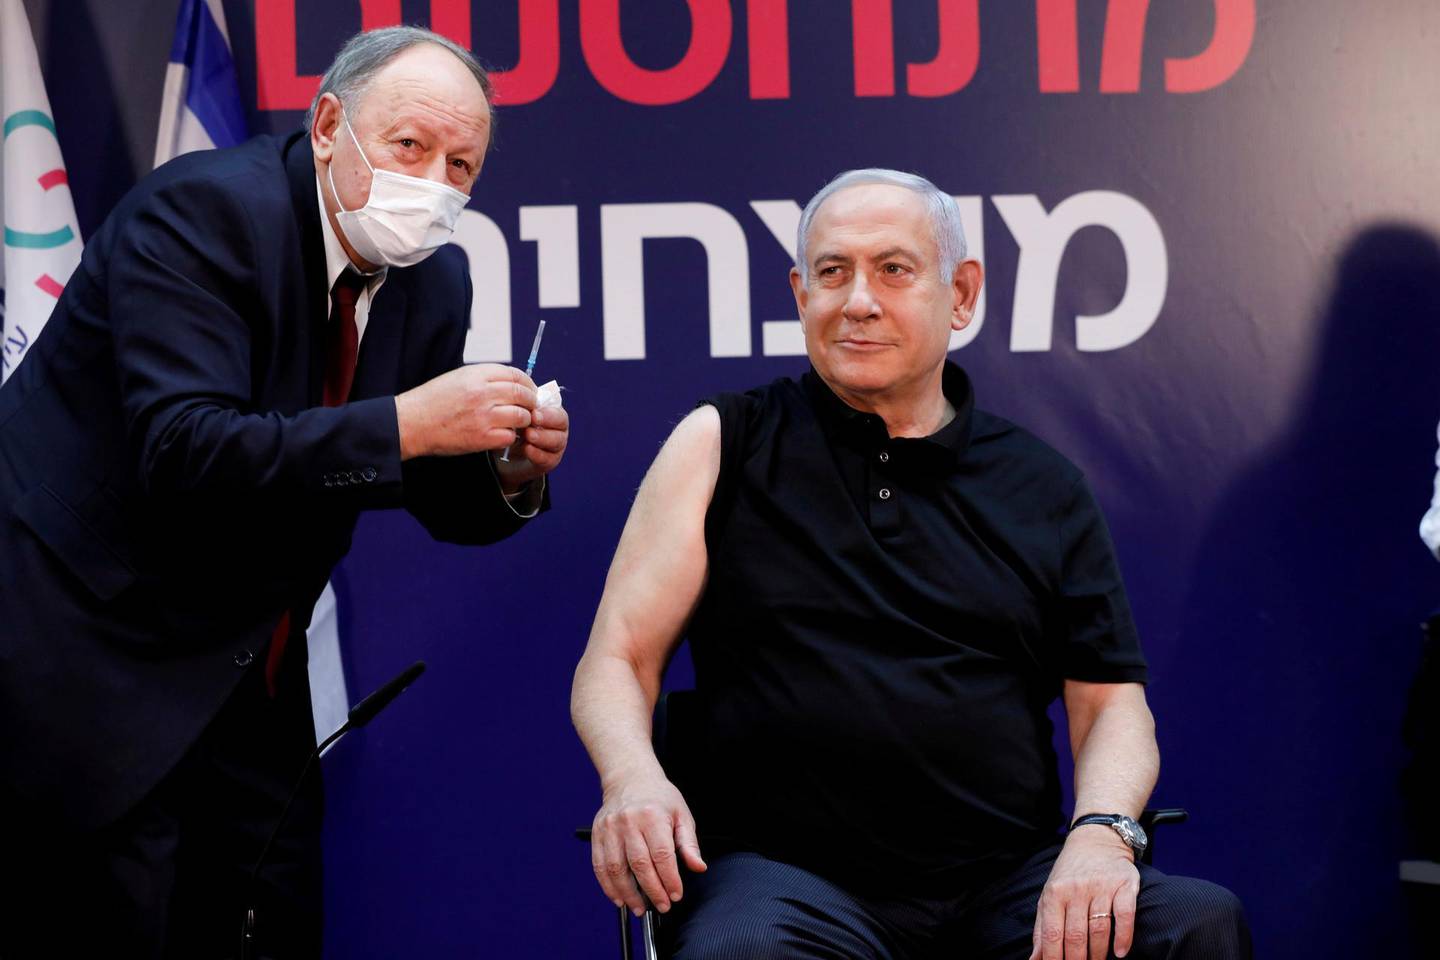 Israeli Prime Minister Benjamin Netanyahu gets ready to receive a coronavirus vaccine at Sheba Medical Center in Ramat Gan, Israel on Saturday, Dec. 19, 2020. (Amir Cohen/Pool via AP)